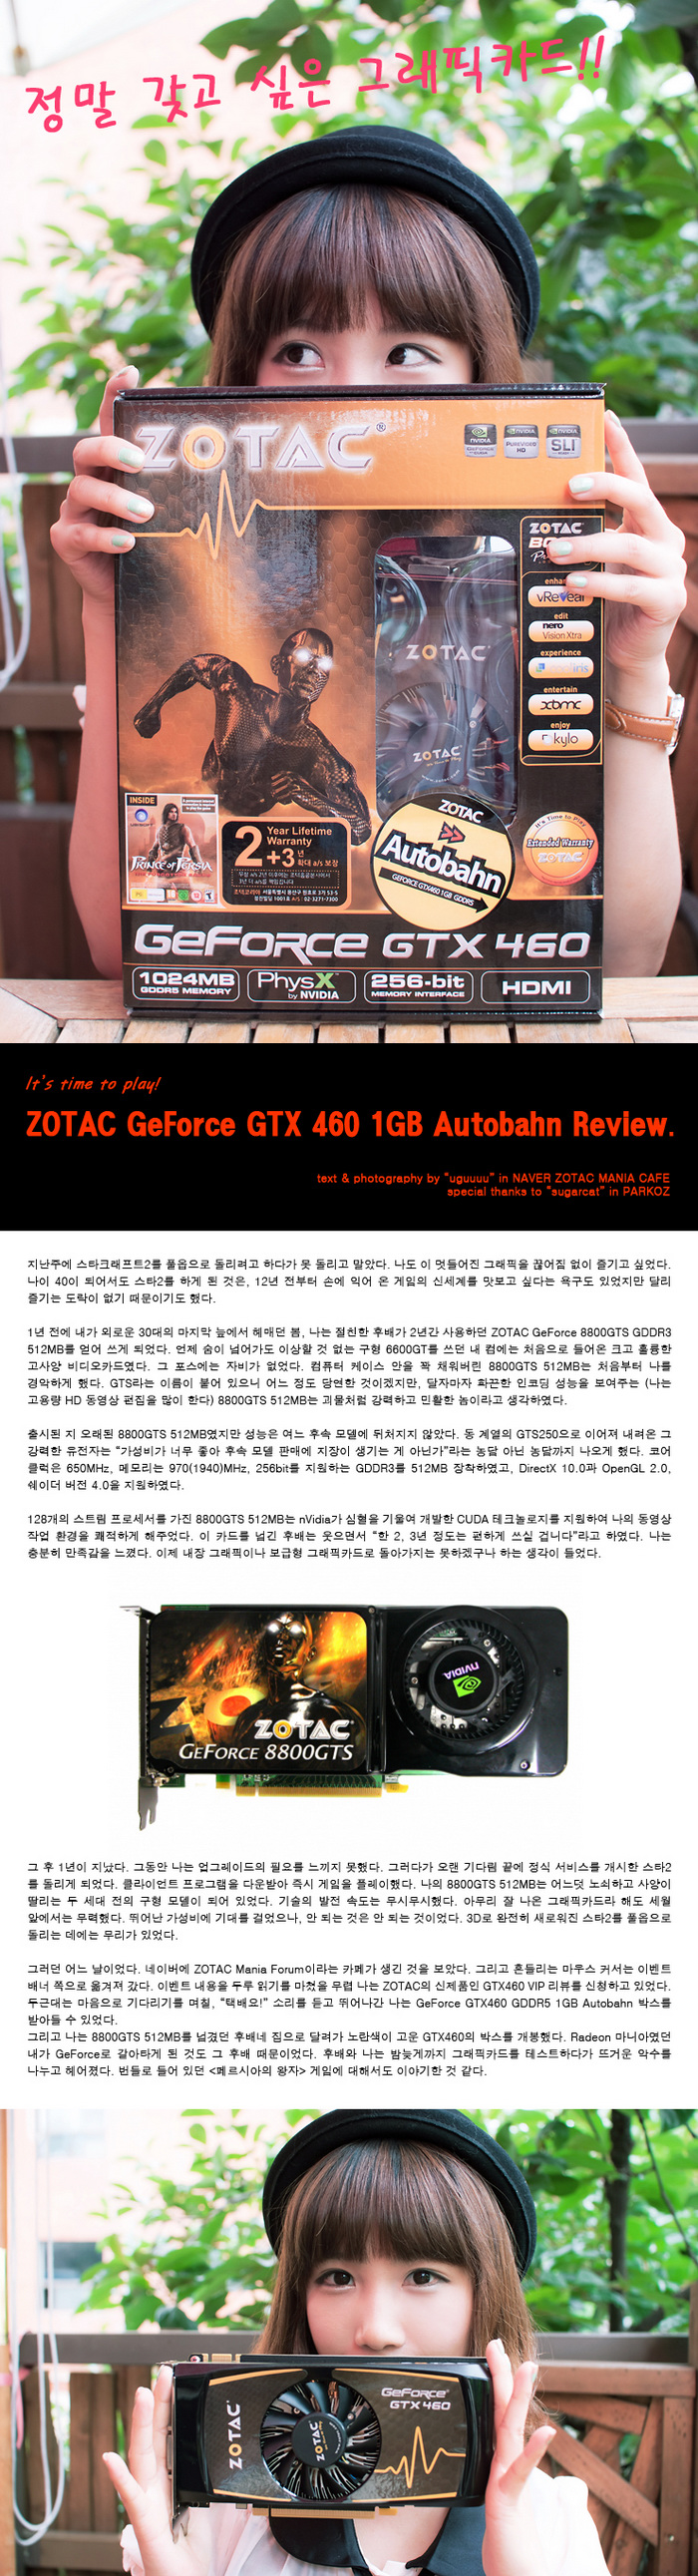 ZOTAC GTX460 1GB